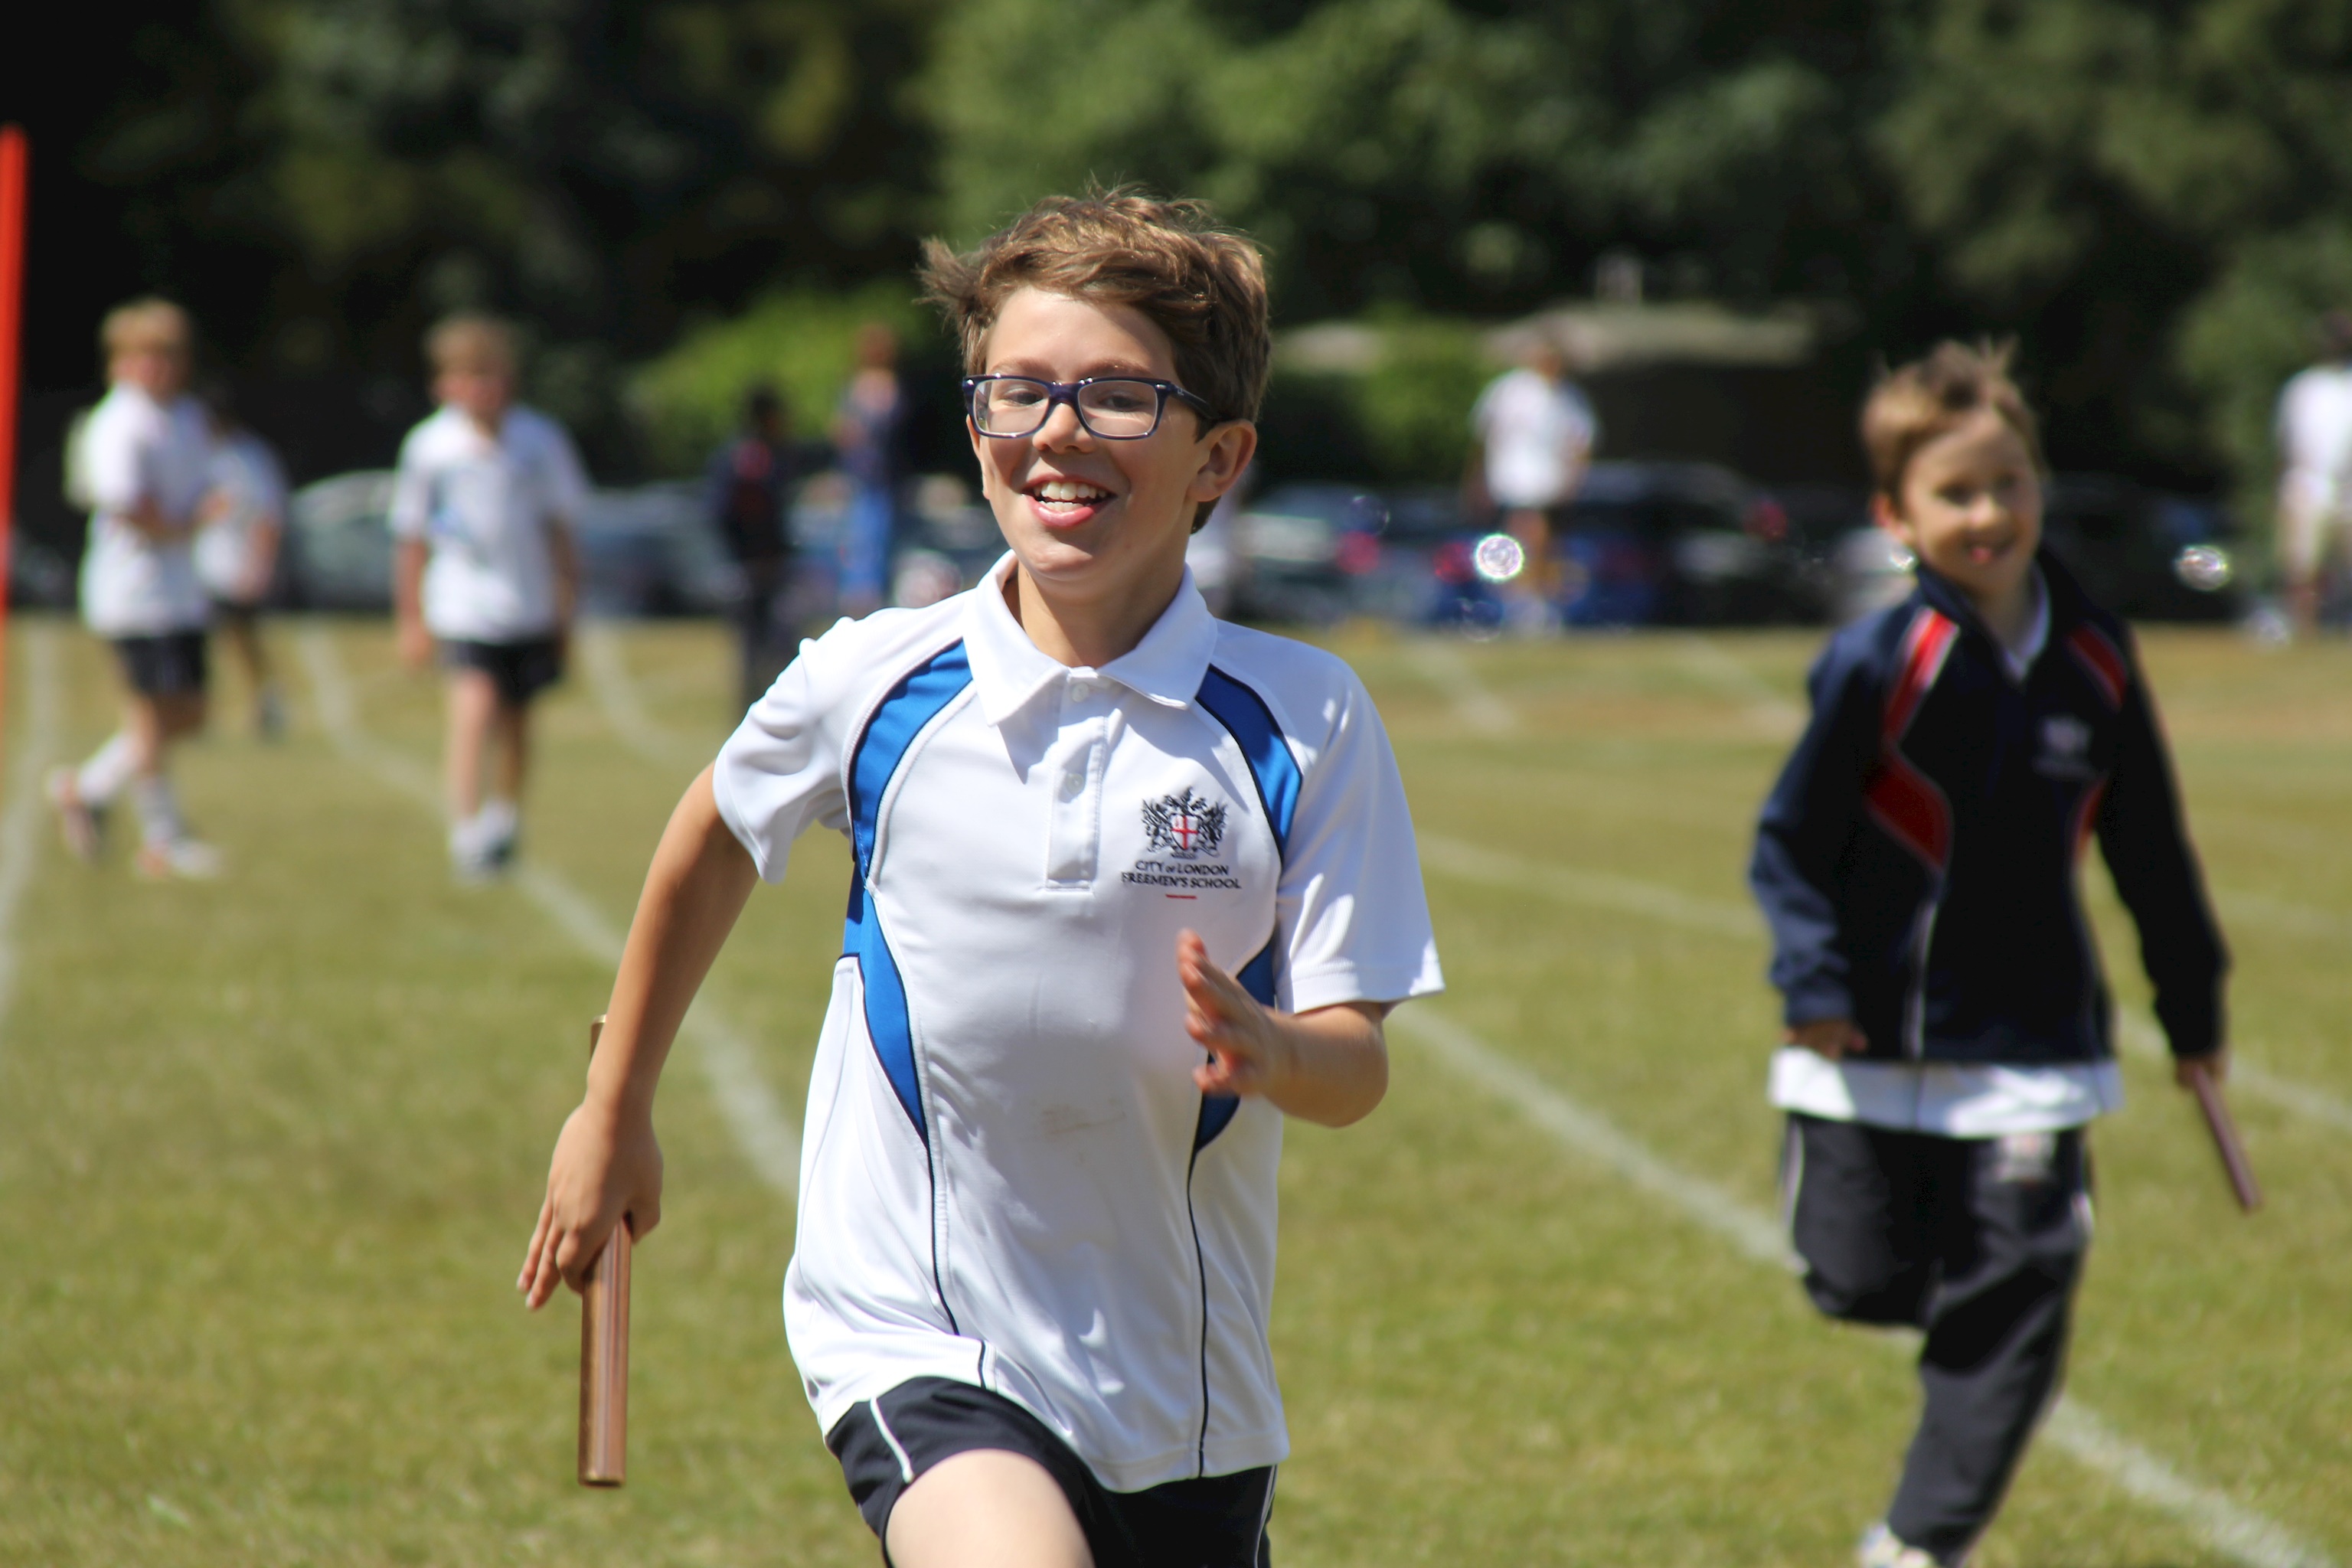 Happy boy winning a sprint relay race